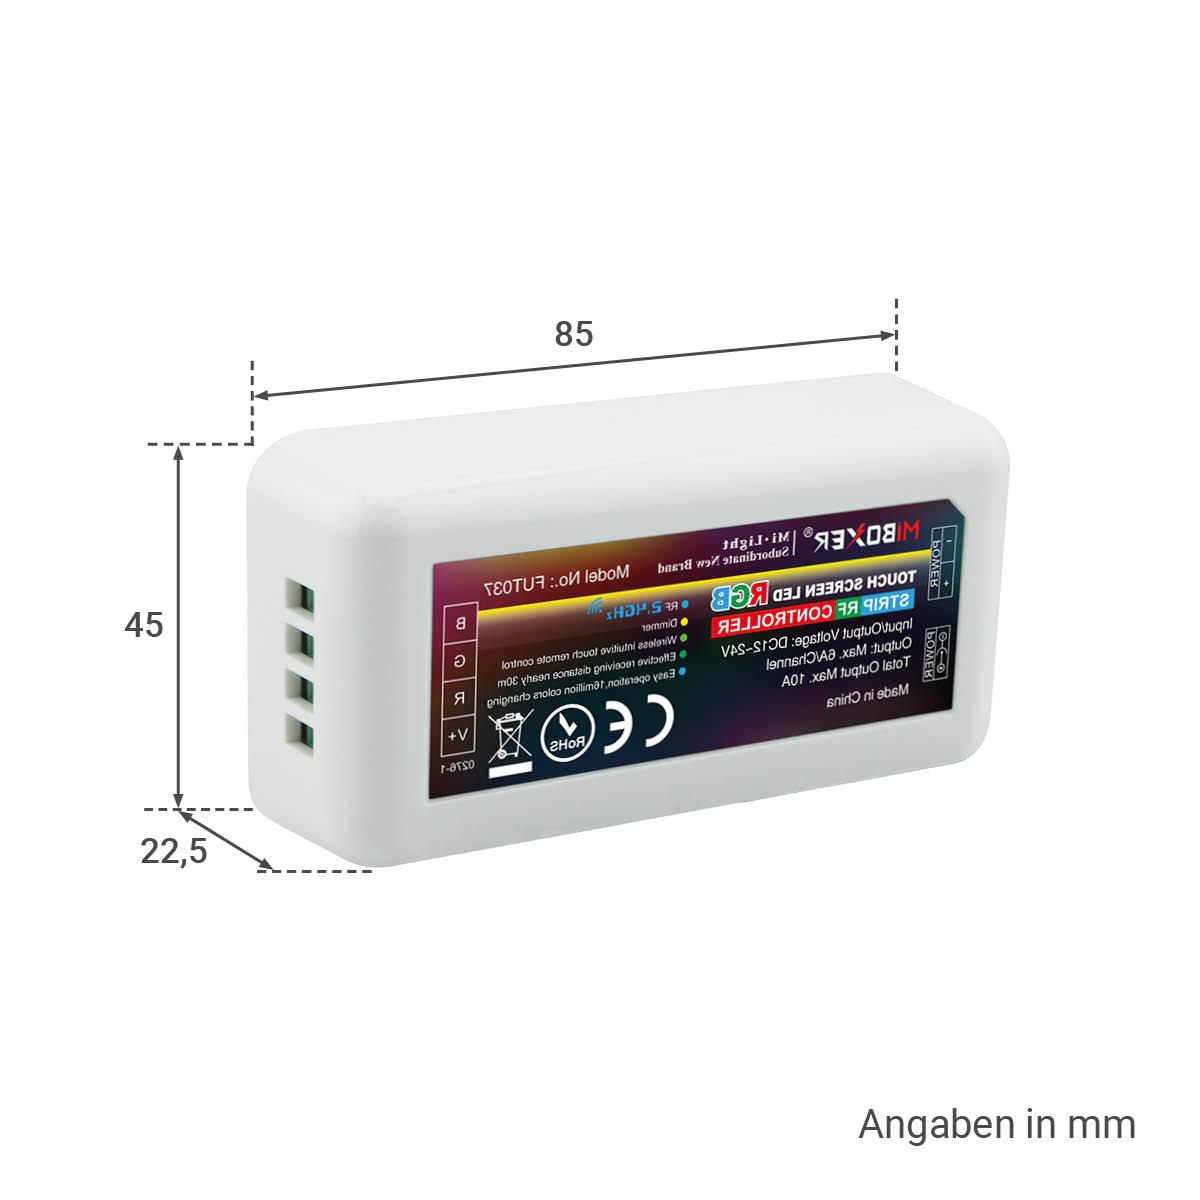 MiBoxer RGB LED Controller 3 Kanal 12/24V Multifunktion LED Strip Panel Steuerung FUT037